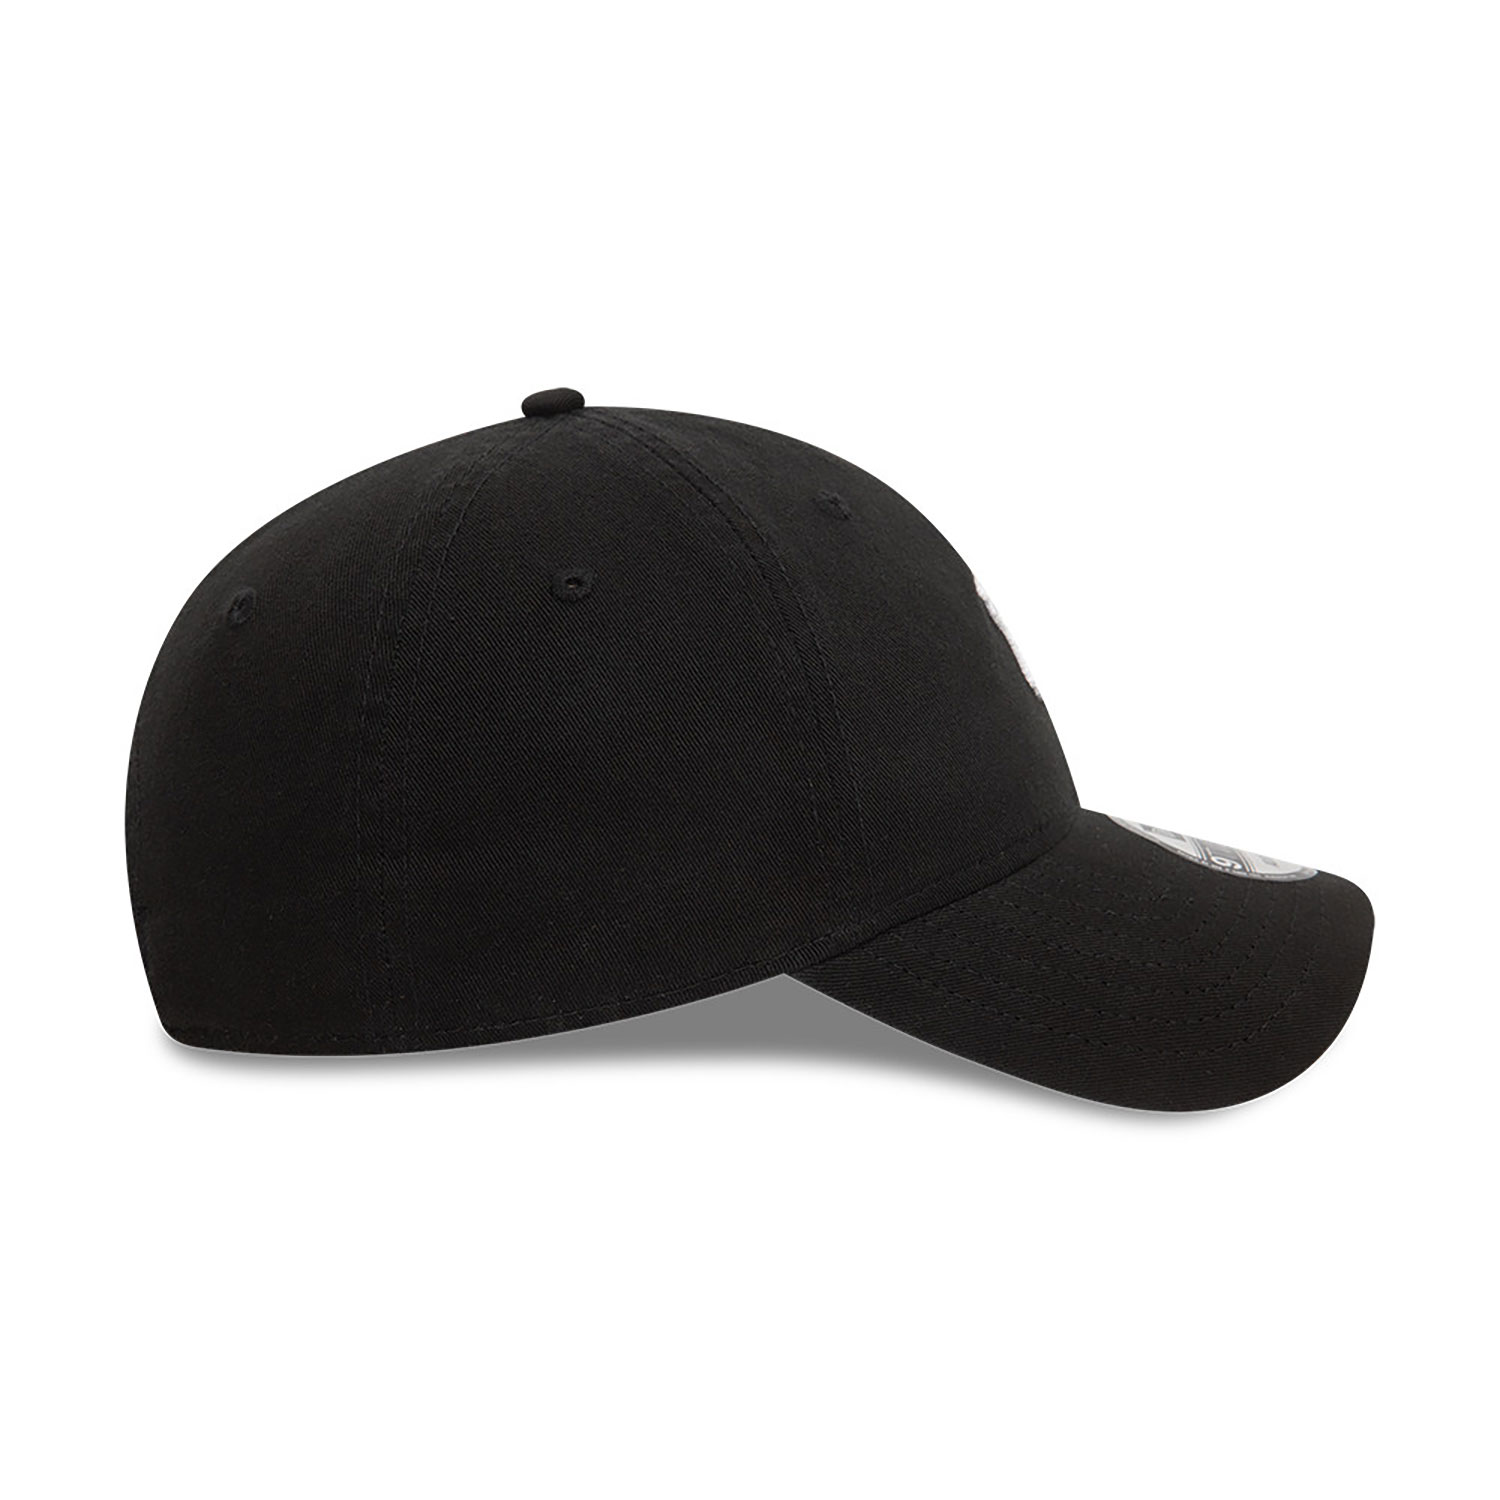 New York Yankees Mini Logo Black 9TWENTY Adjustable Cap